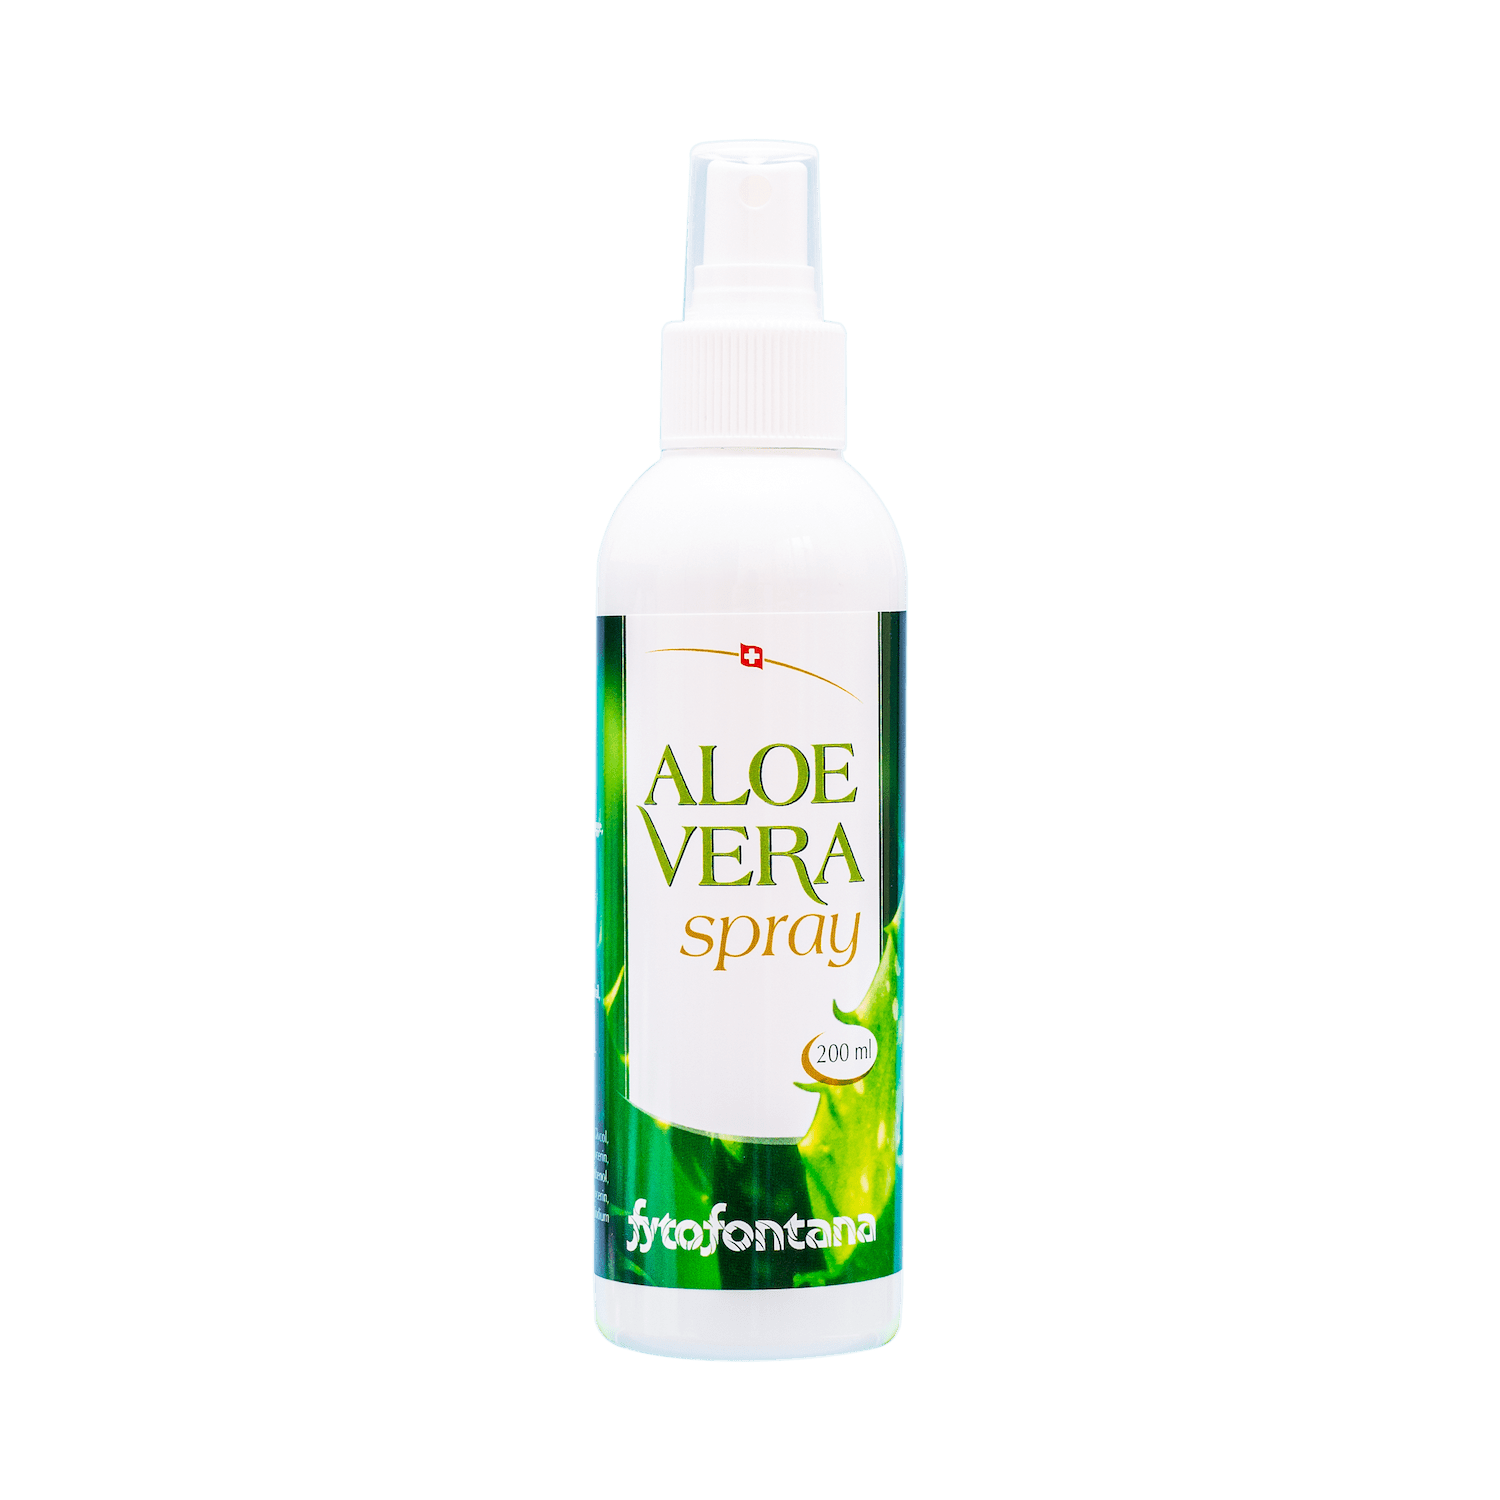 barsten Staren Vuil Aloe vera spray - Fytofontana